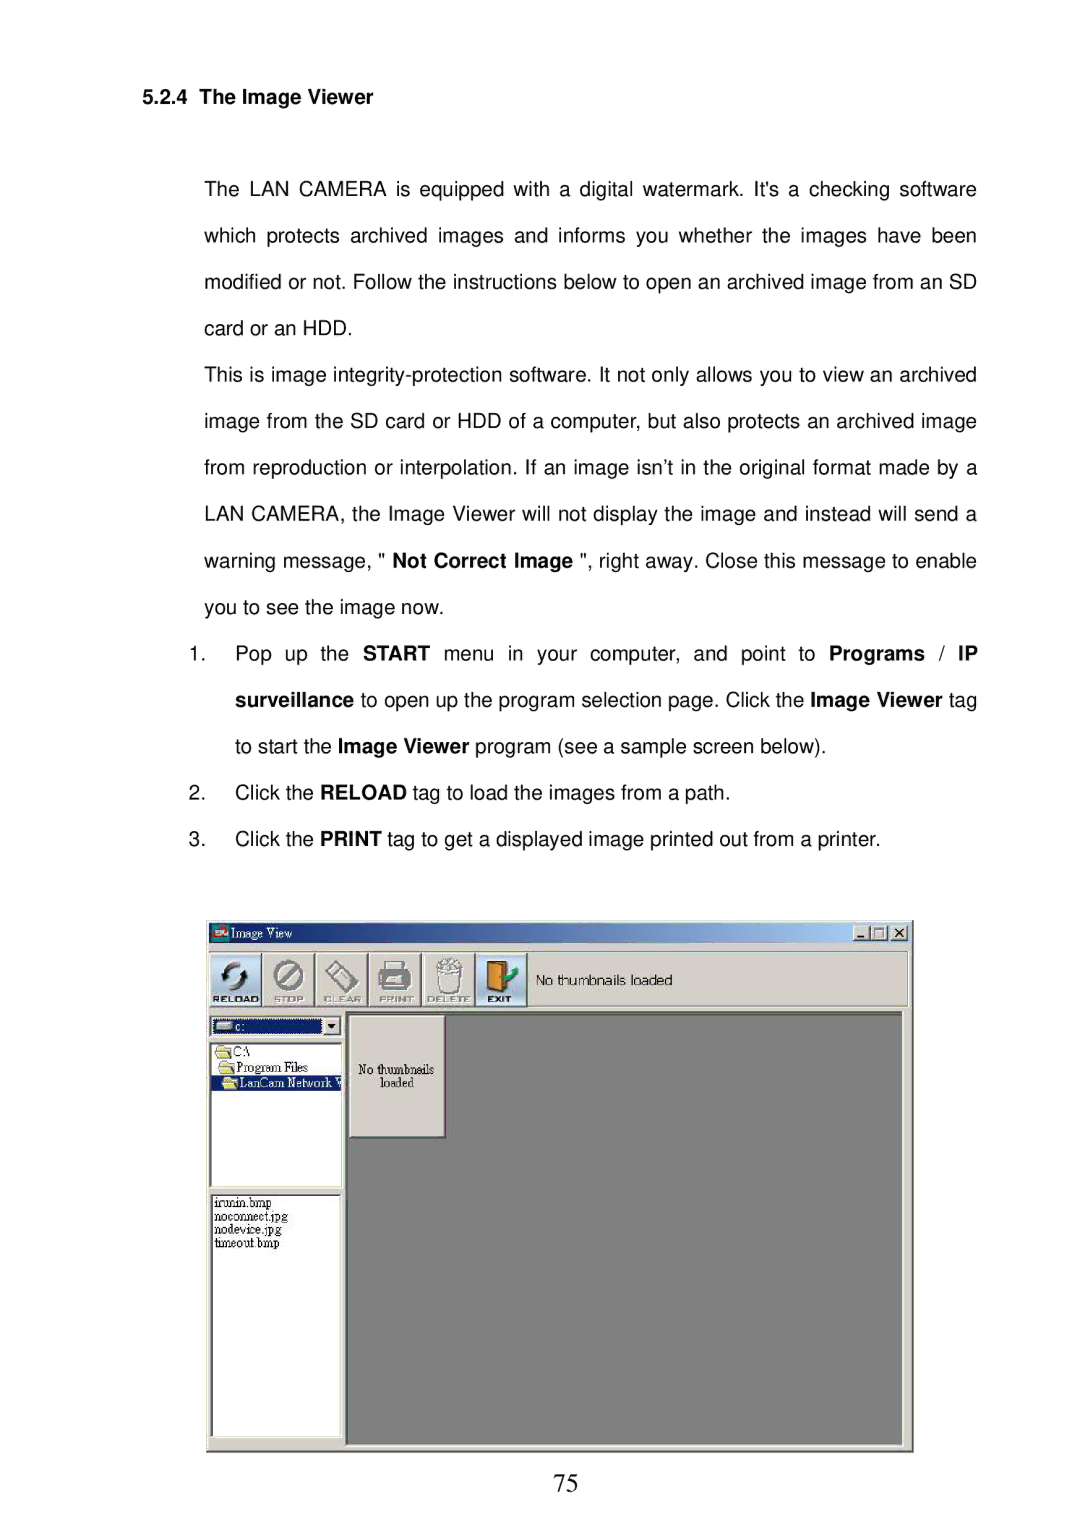 Sony MPEG4 LAN Camera operation manual Image Viewer 